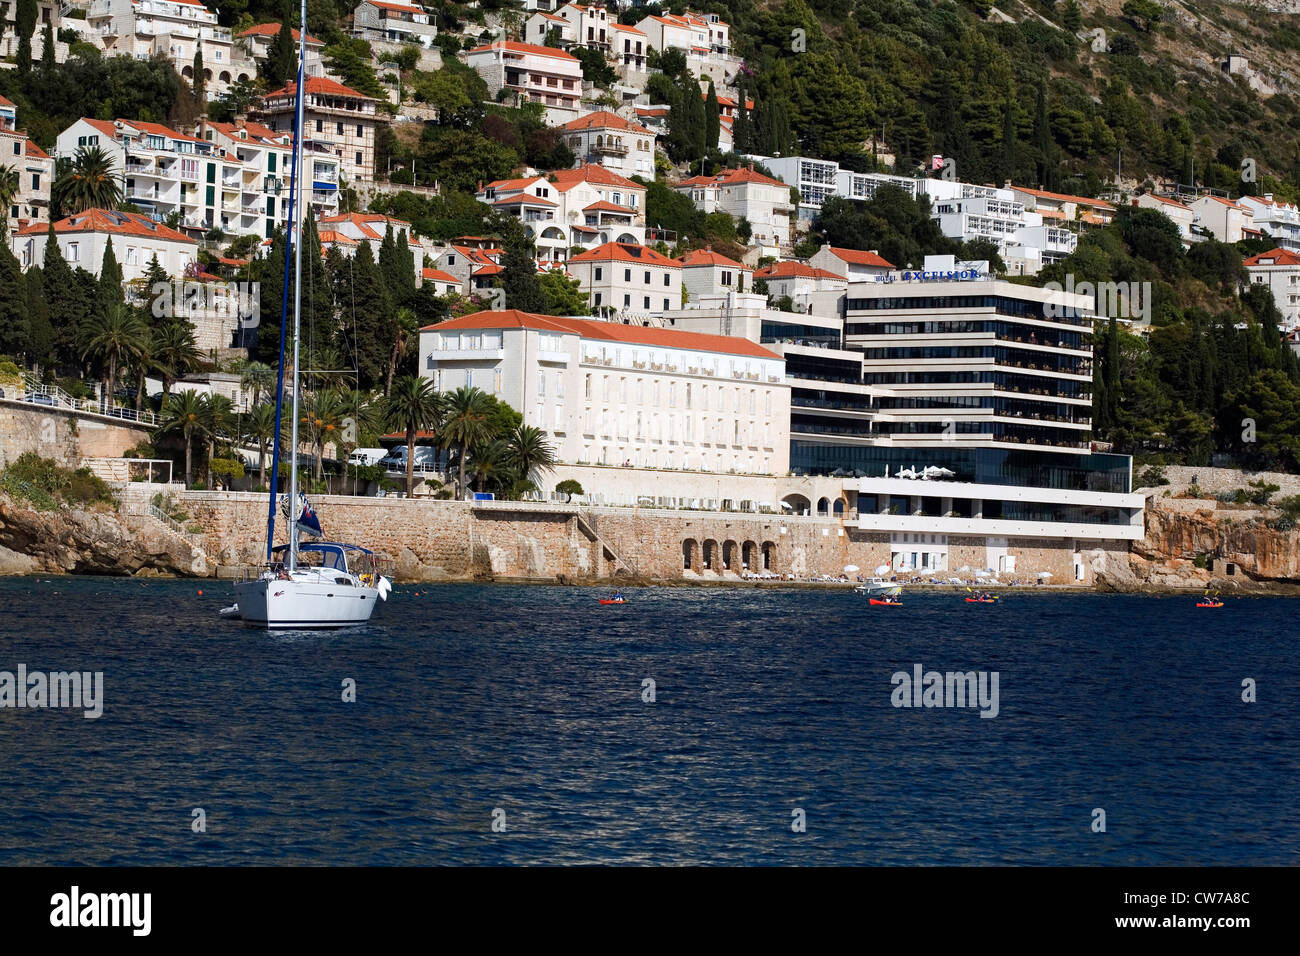 Excelsior Hotel by the coastline near Dubrovnik Dalmatia Croatia Stock Photo